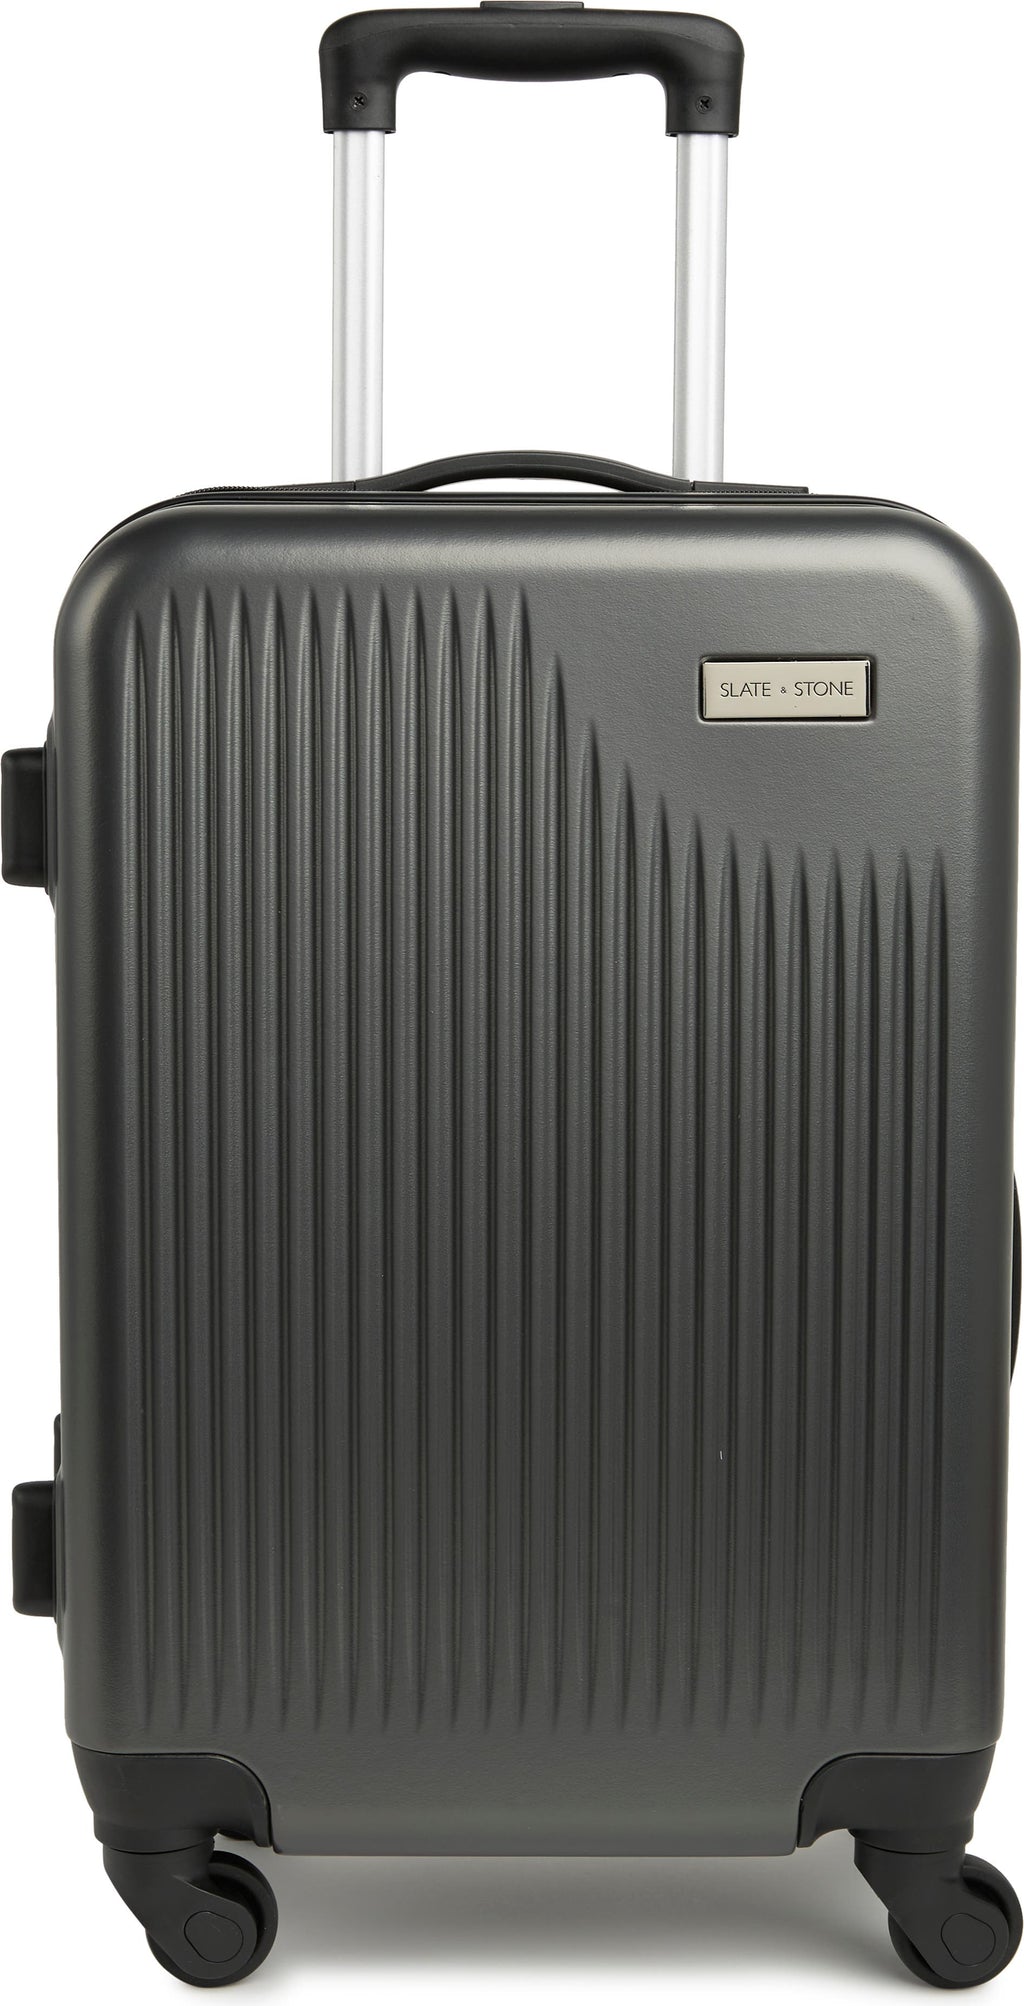 SLATE & STONE SLATE AND STONE Carry-On Luggage, Main, color, GREY